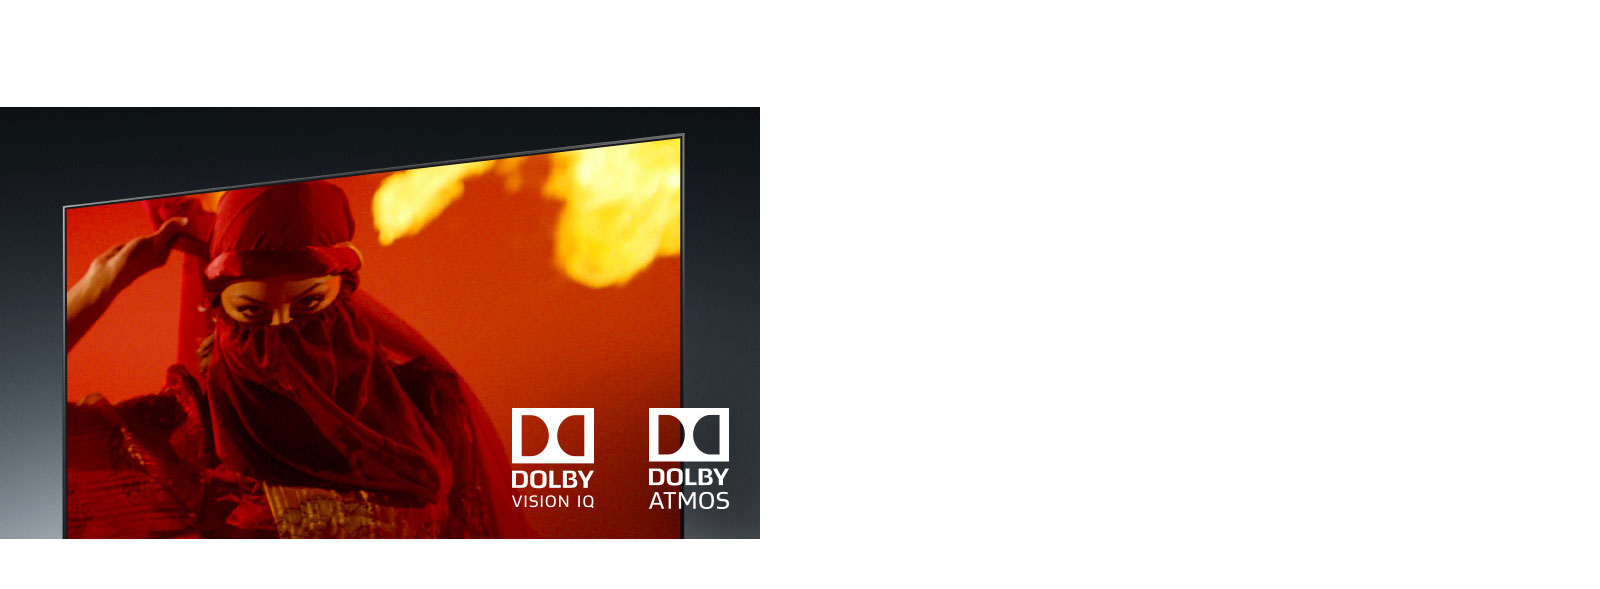 Dolby Vision IQ & Atmos